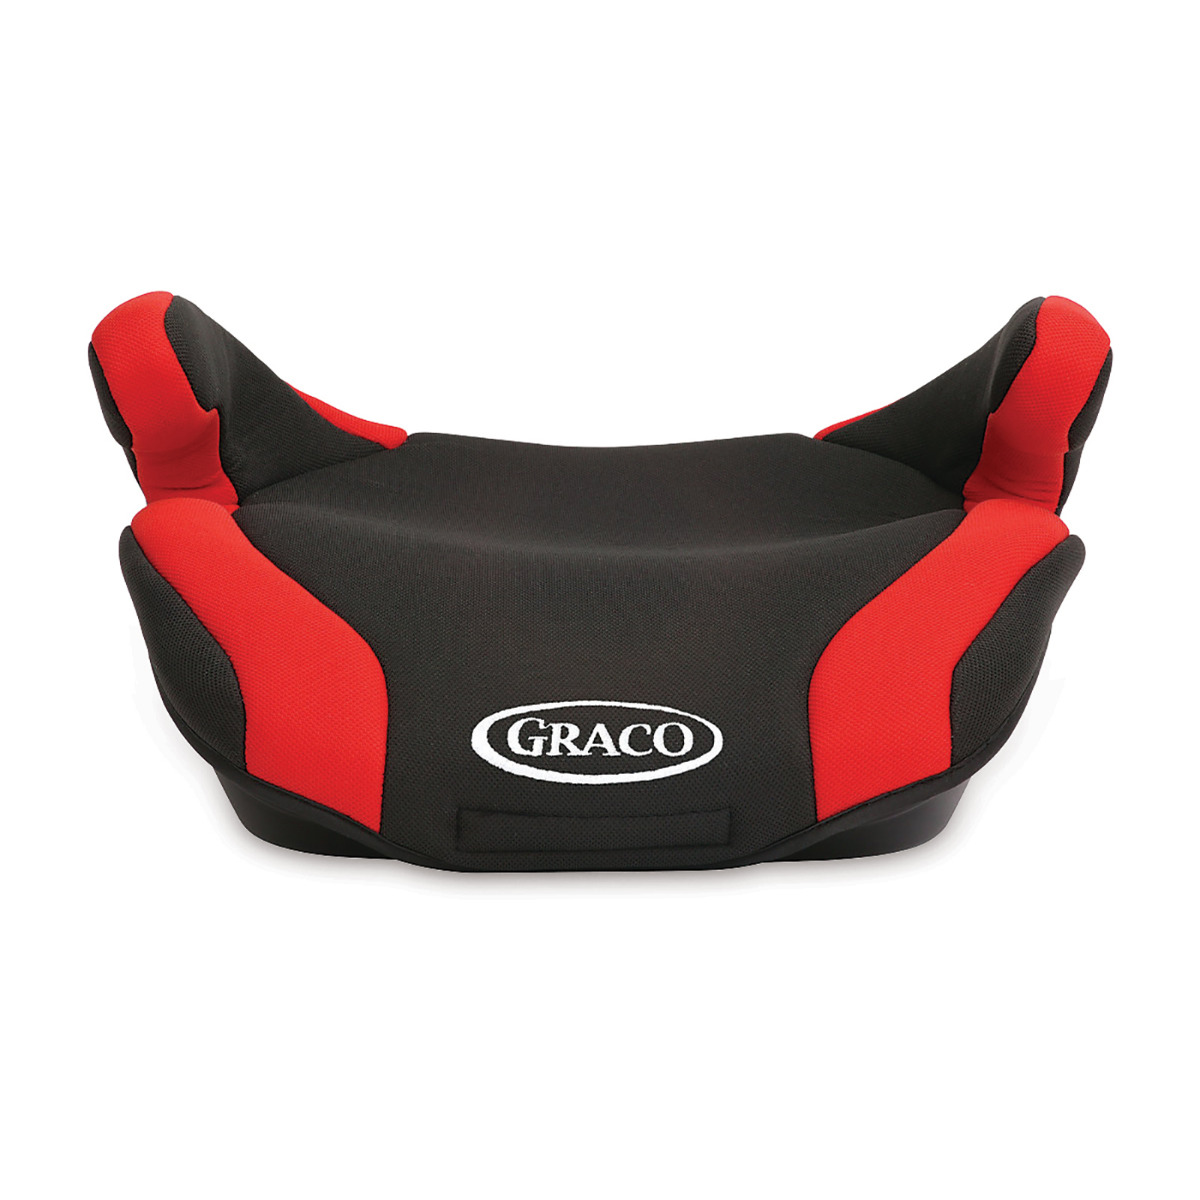 Three quarter view of Graco Connext car seat